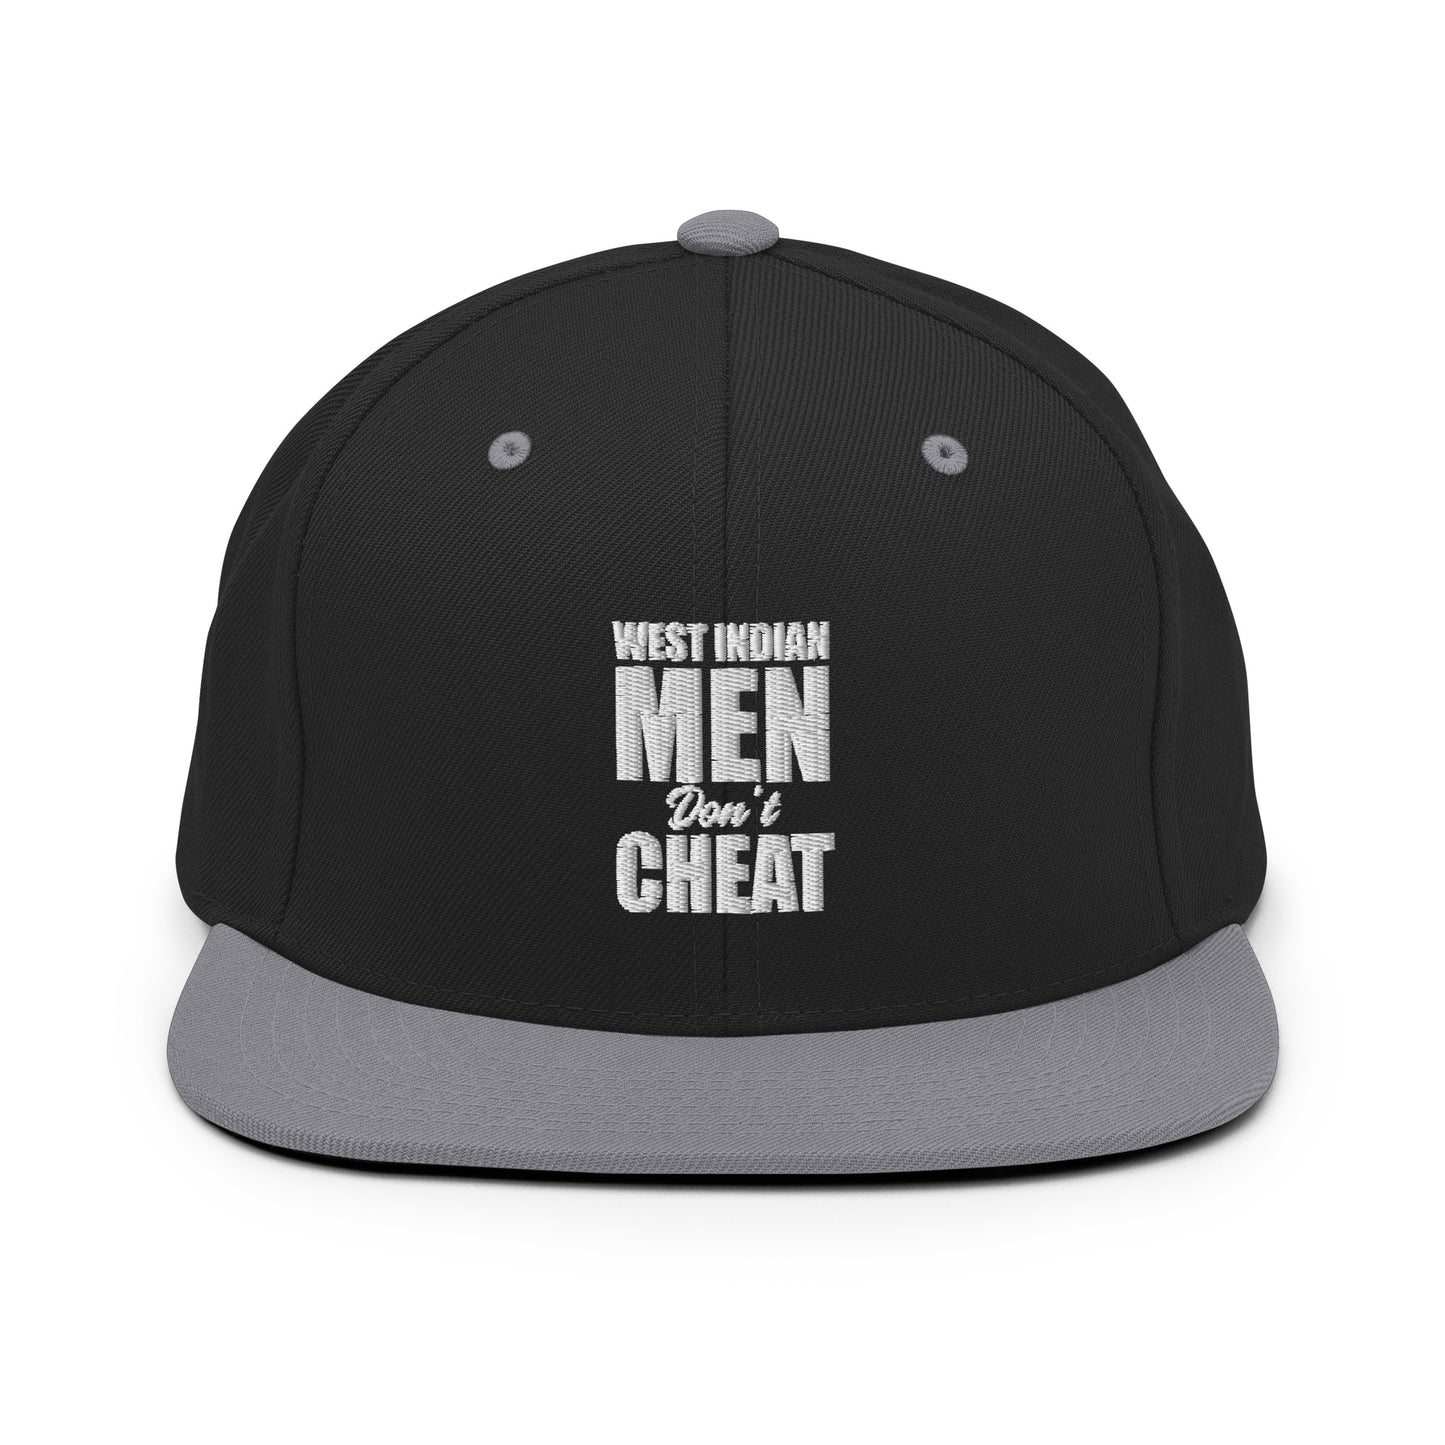 West Indian Men Don't Cheat Snapback Hat